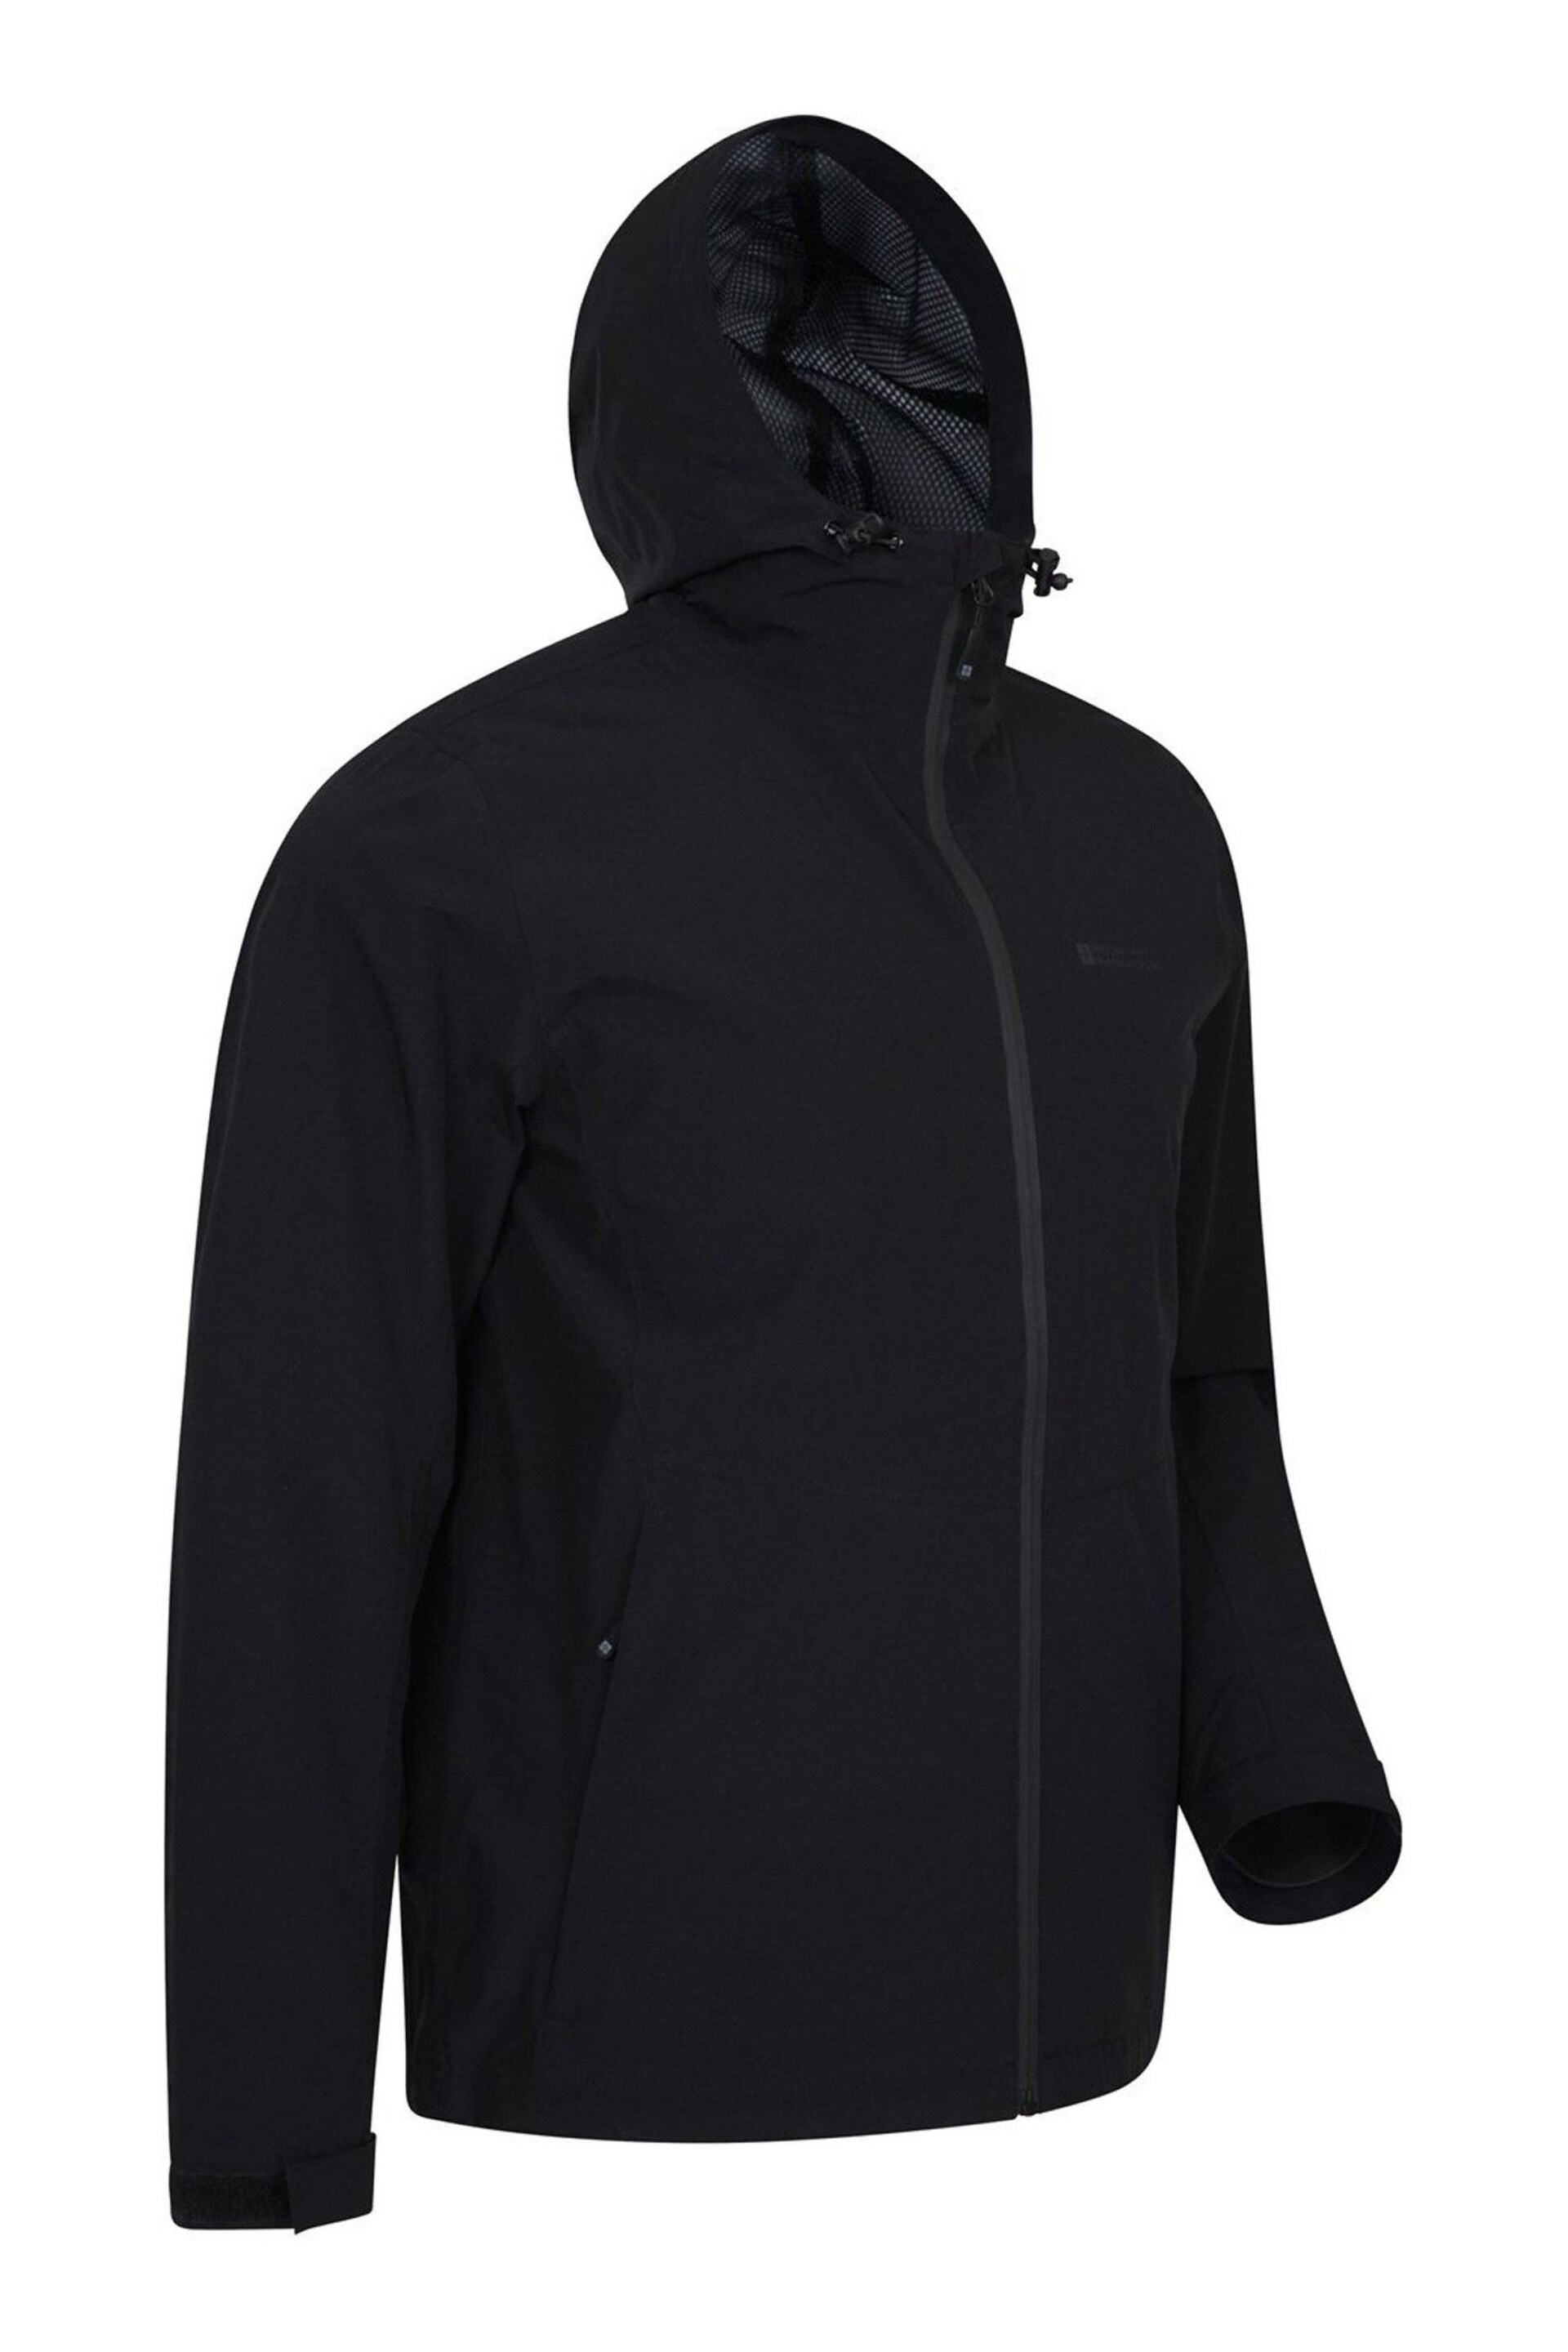 Mountain Warehouse Black Covert Mens Lightweight, Waterproof Outdoor Jacket - Image 2 of 4